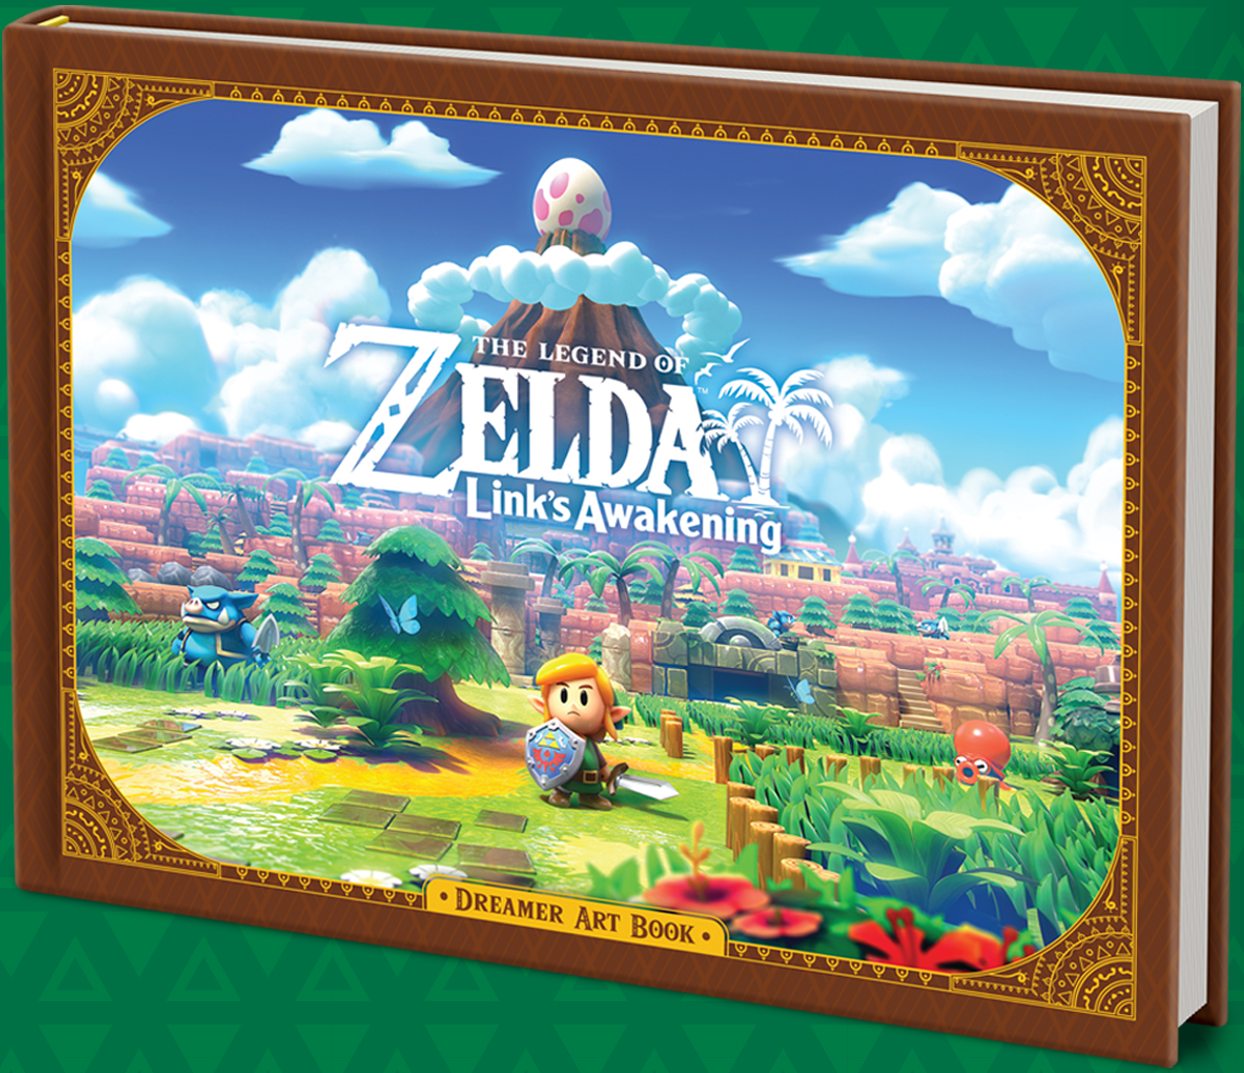 The Legend of Zelda: Link's Awakening: Dreamer Edition, Nintendo